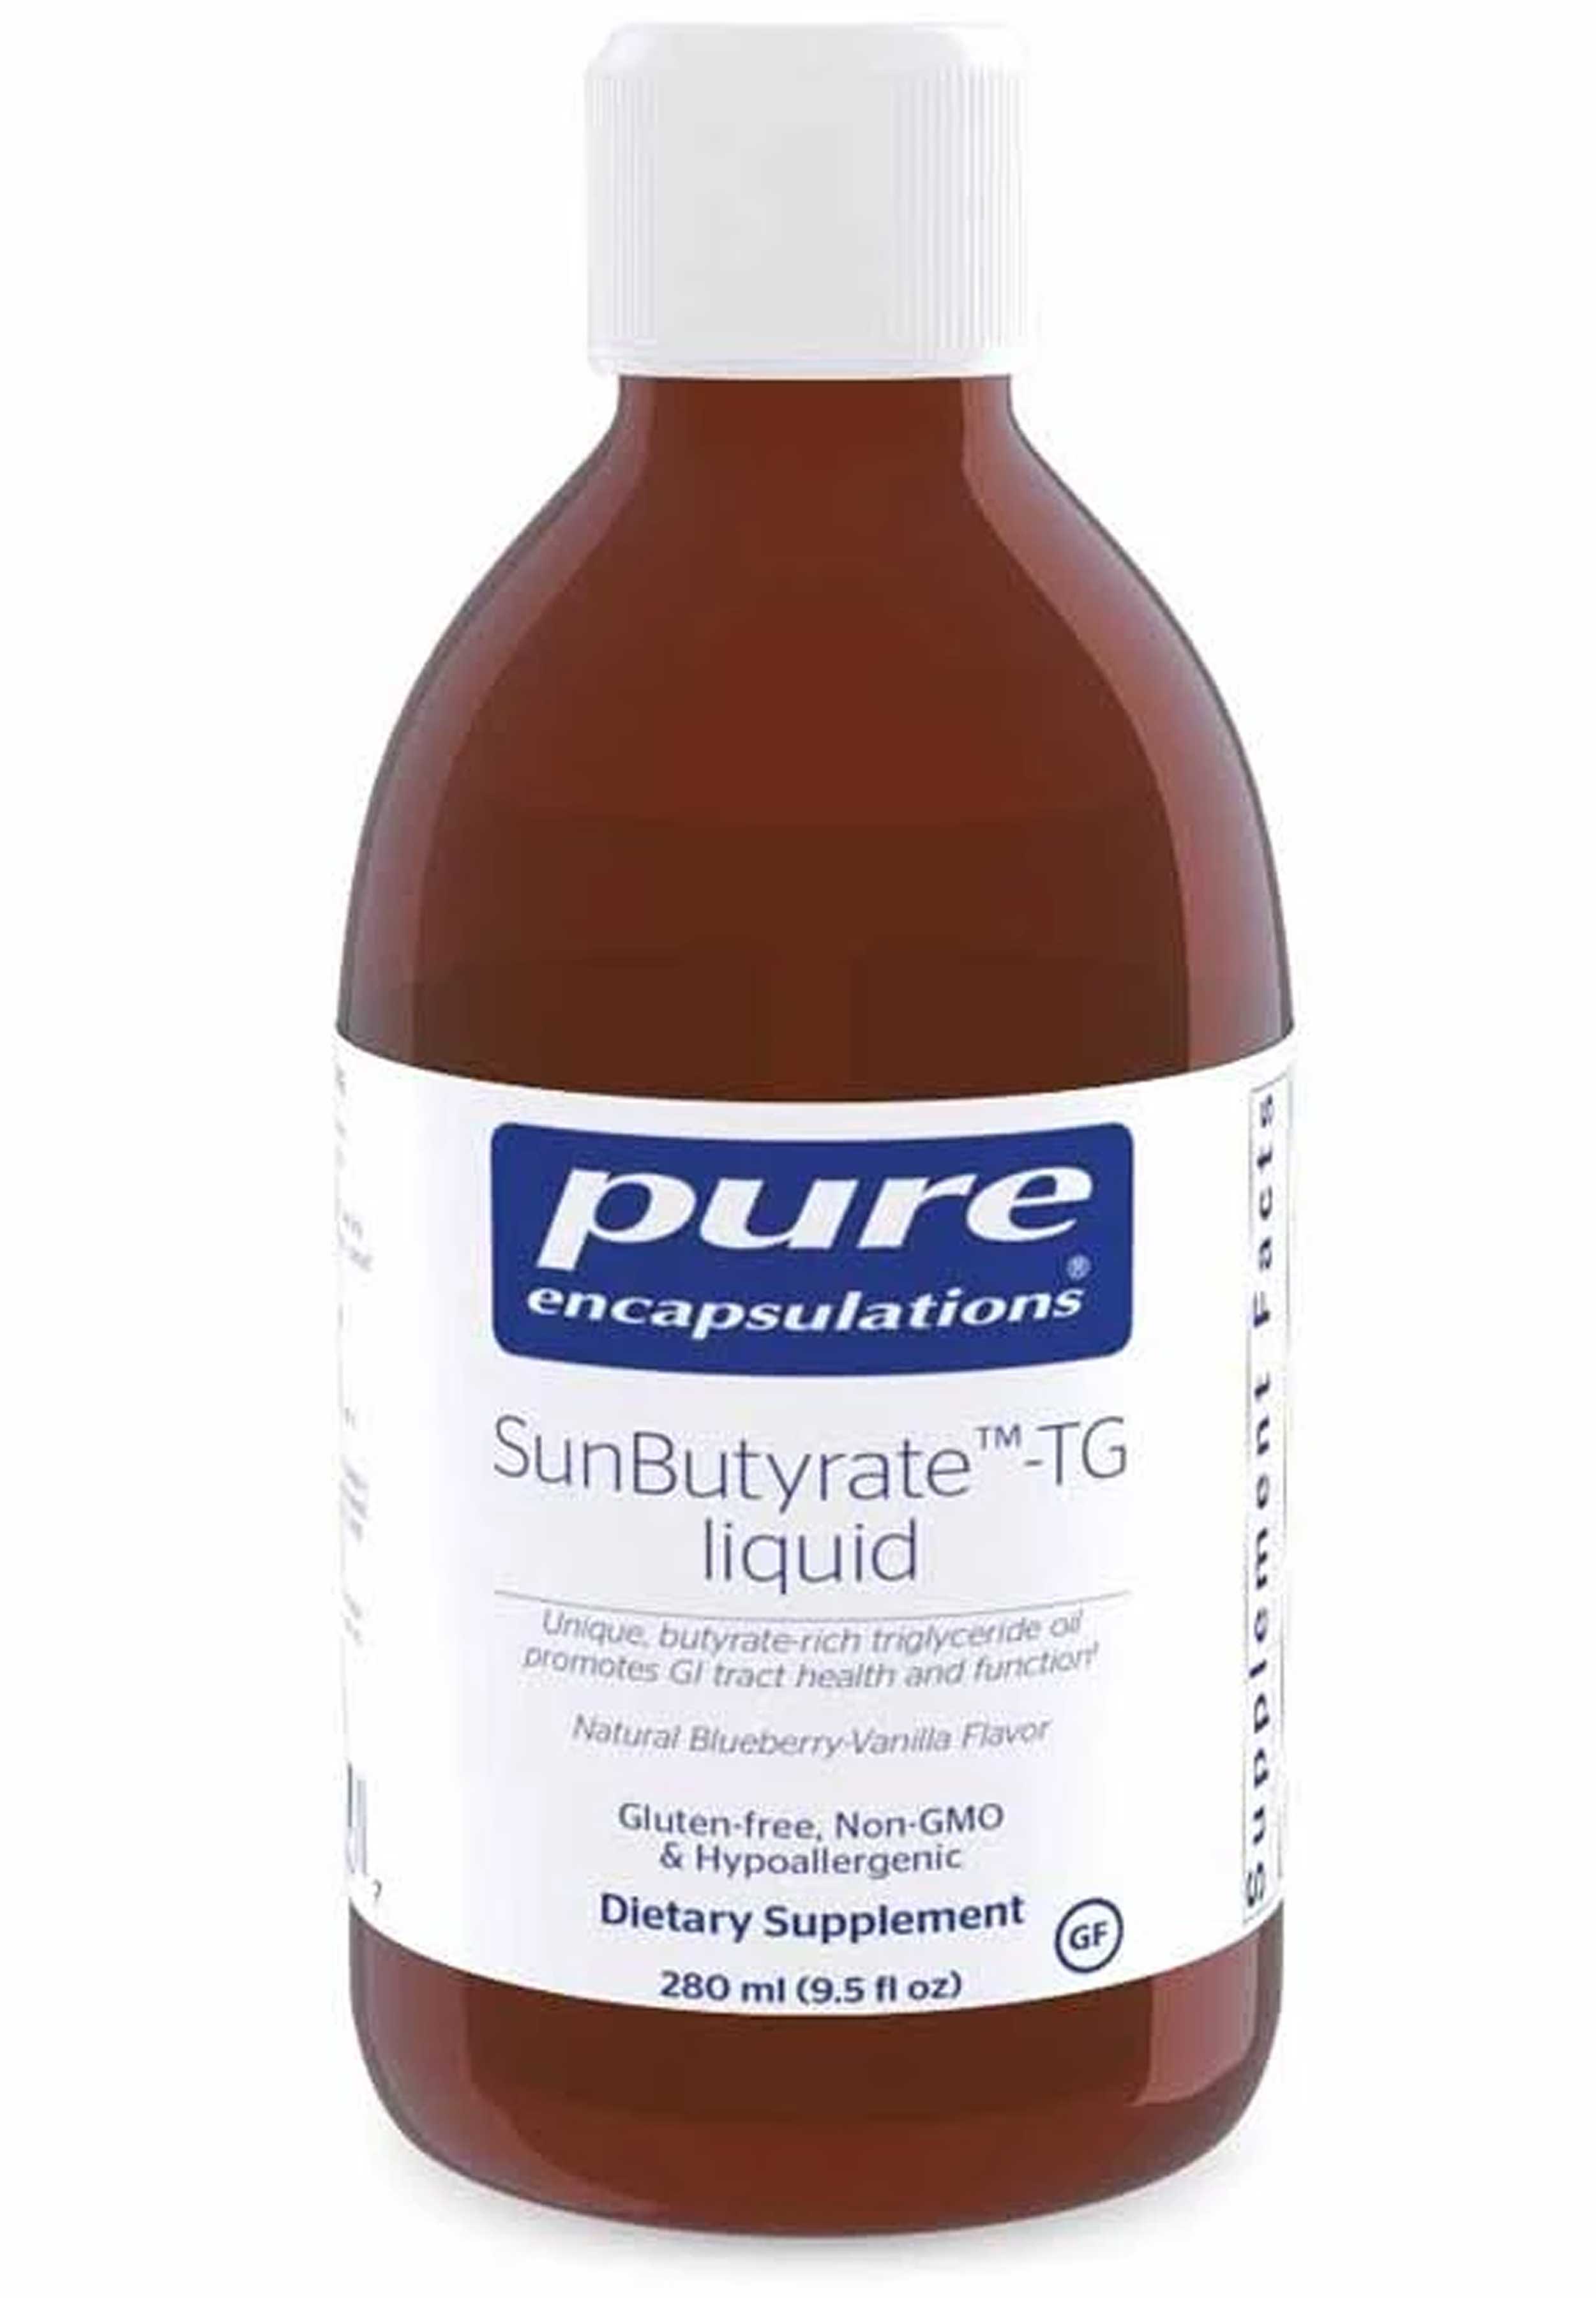 Pure Encapsulations SunButyrate™-TG liquid